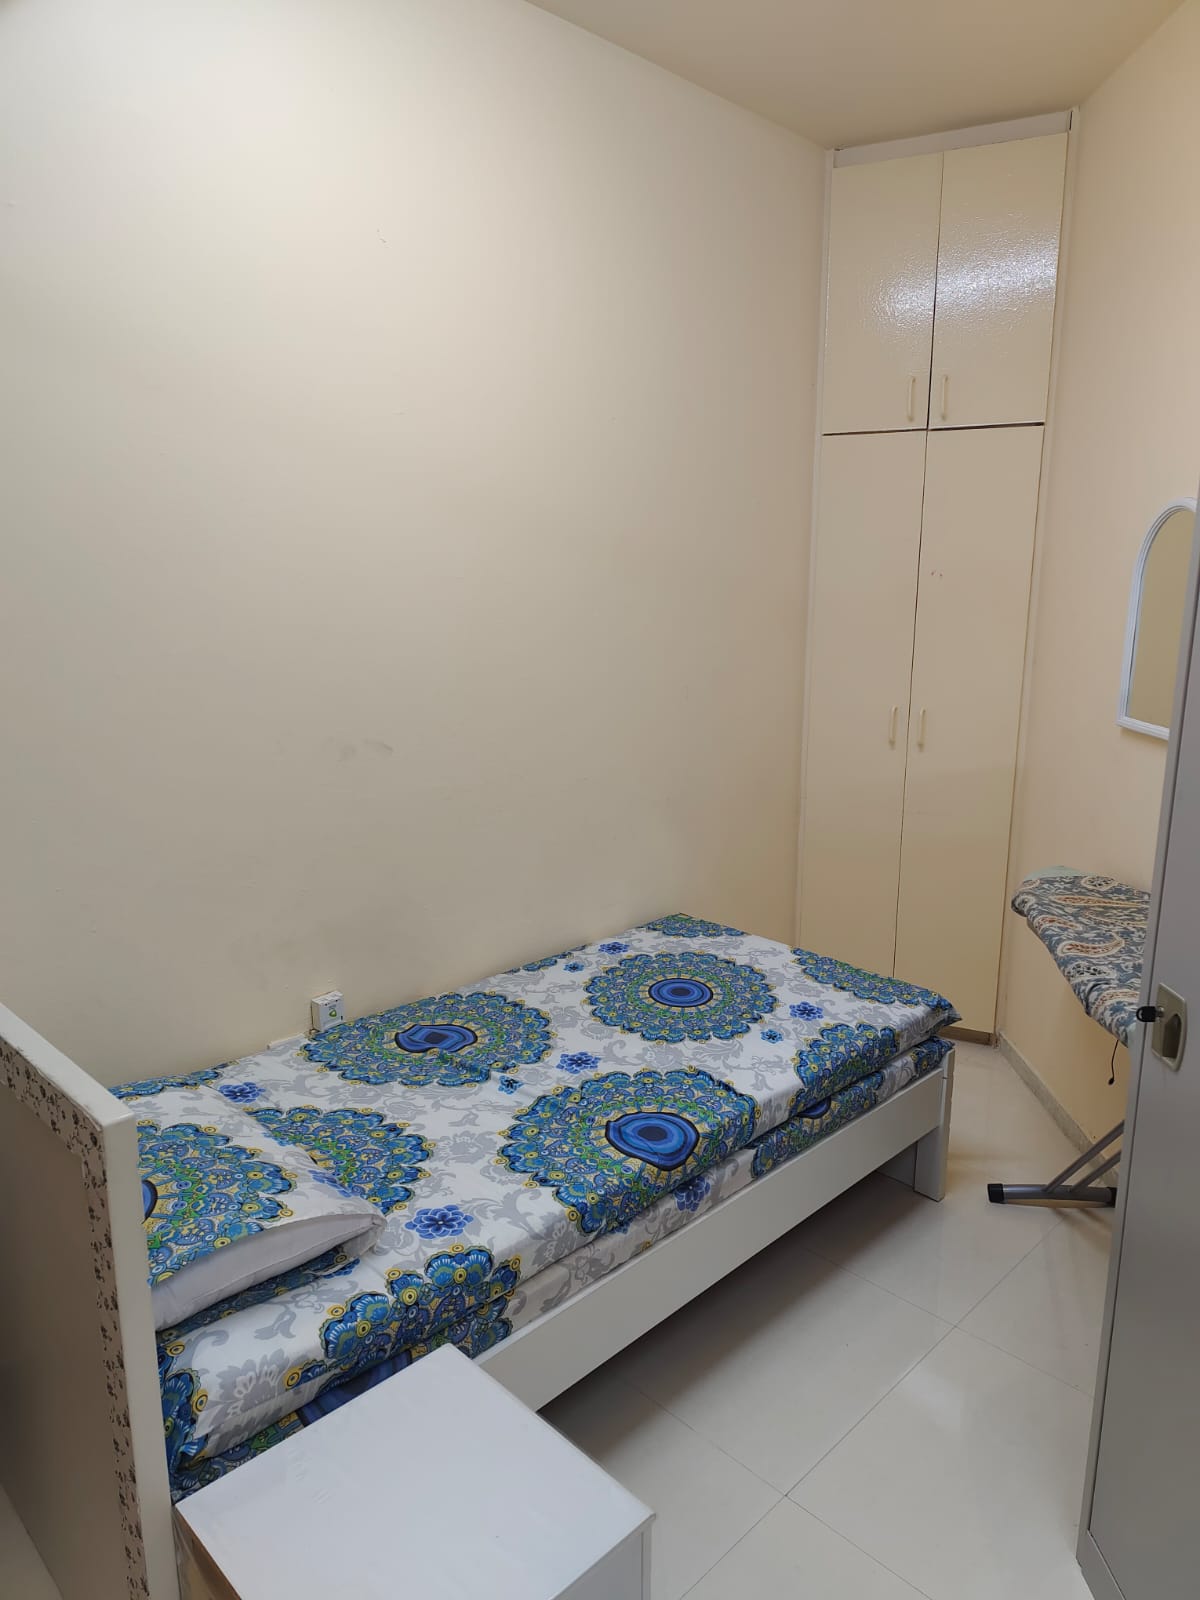 Executive Ladies Bed Space Available In Karama Near Karama Centre